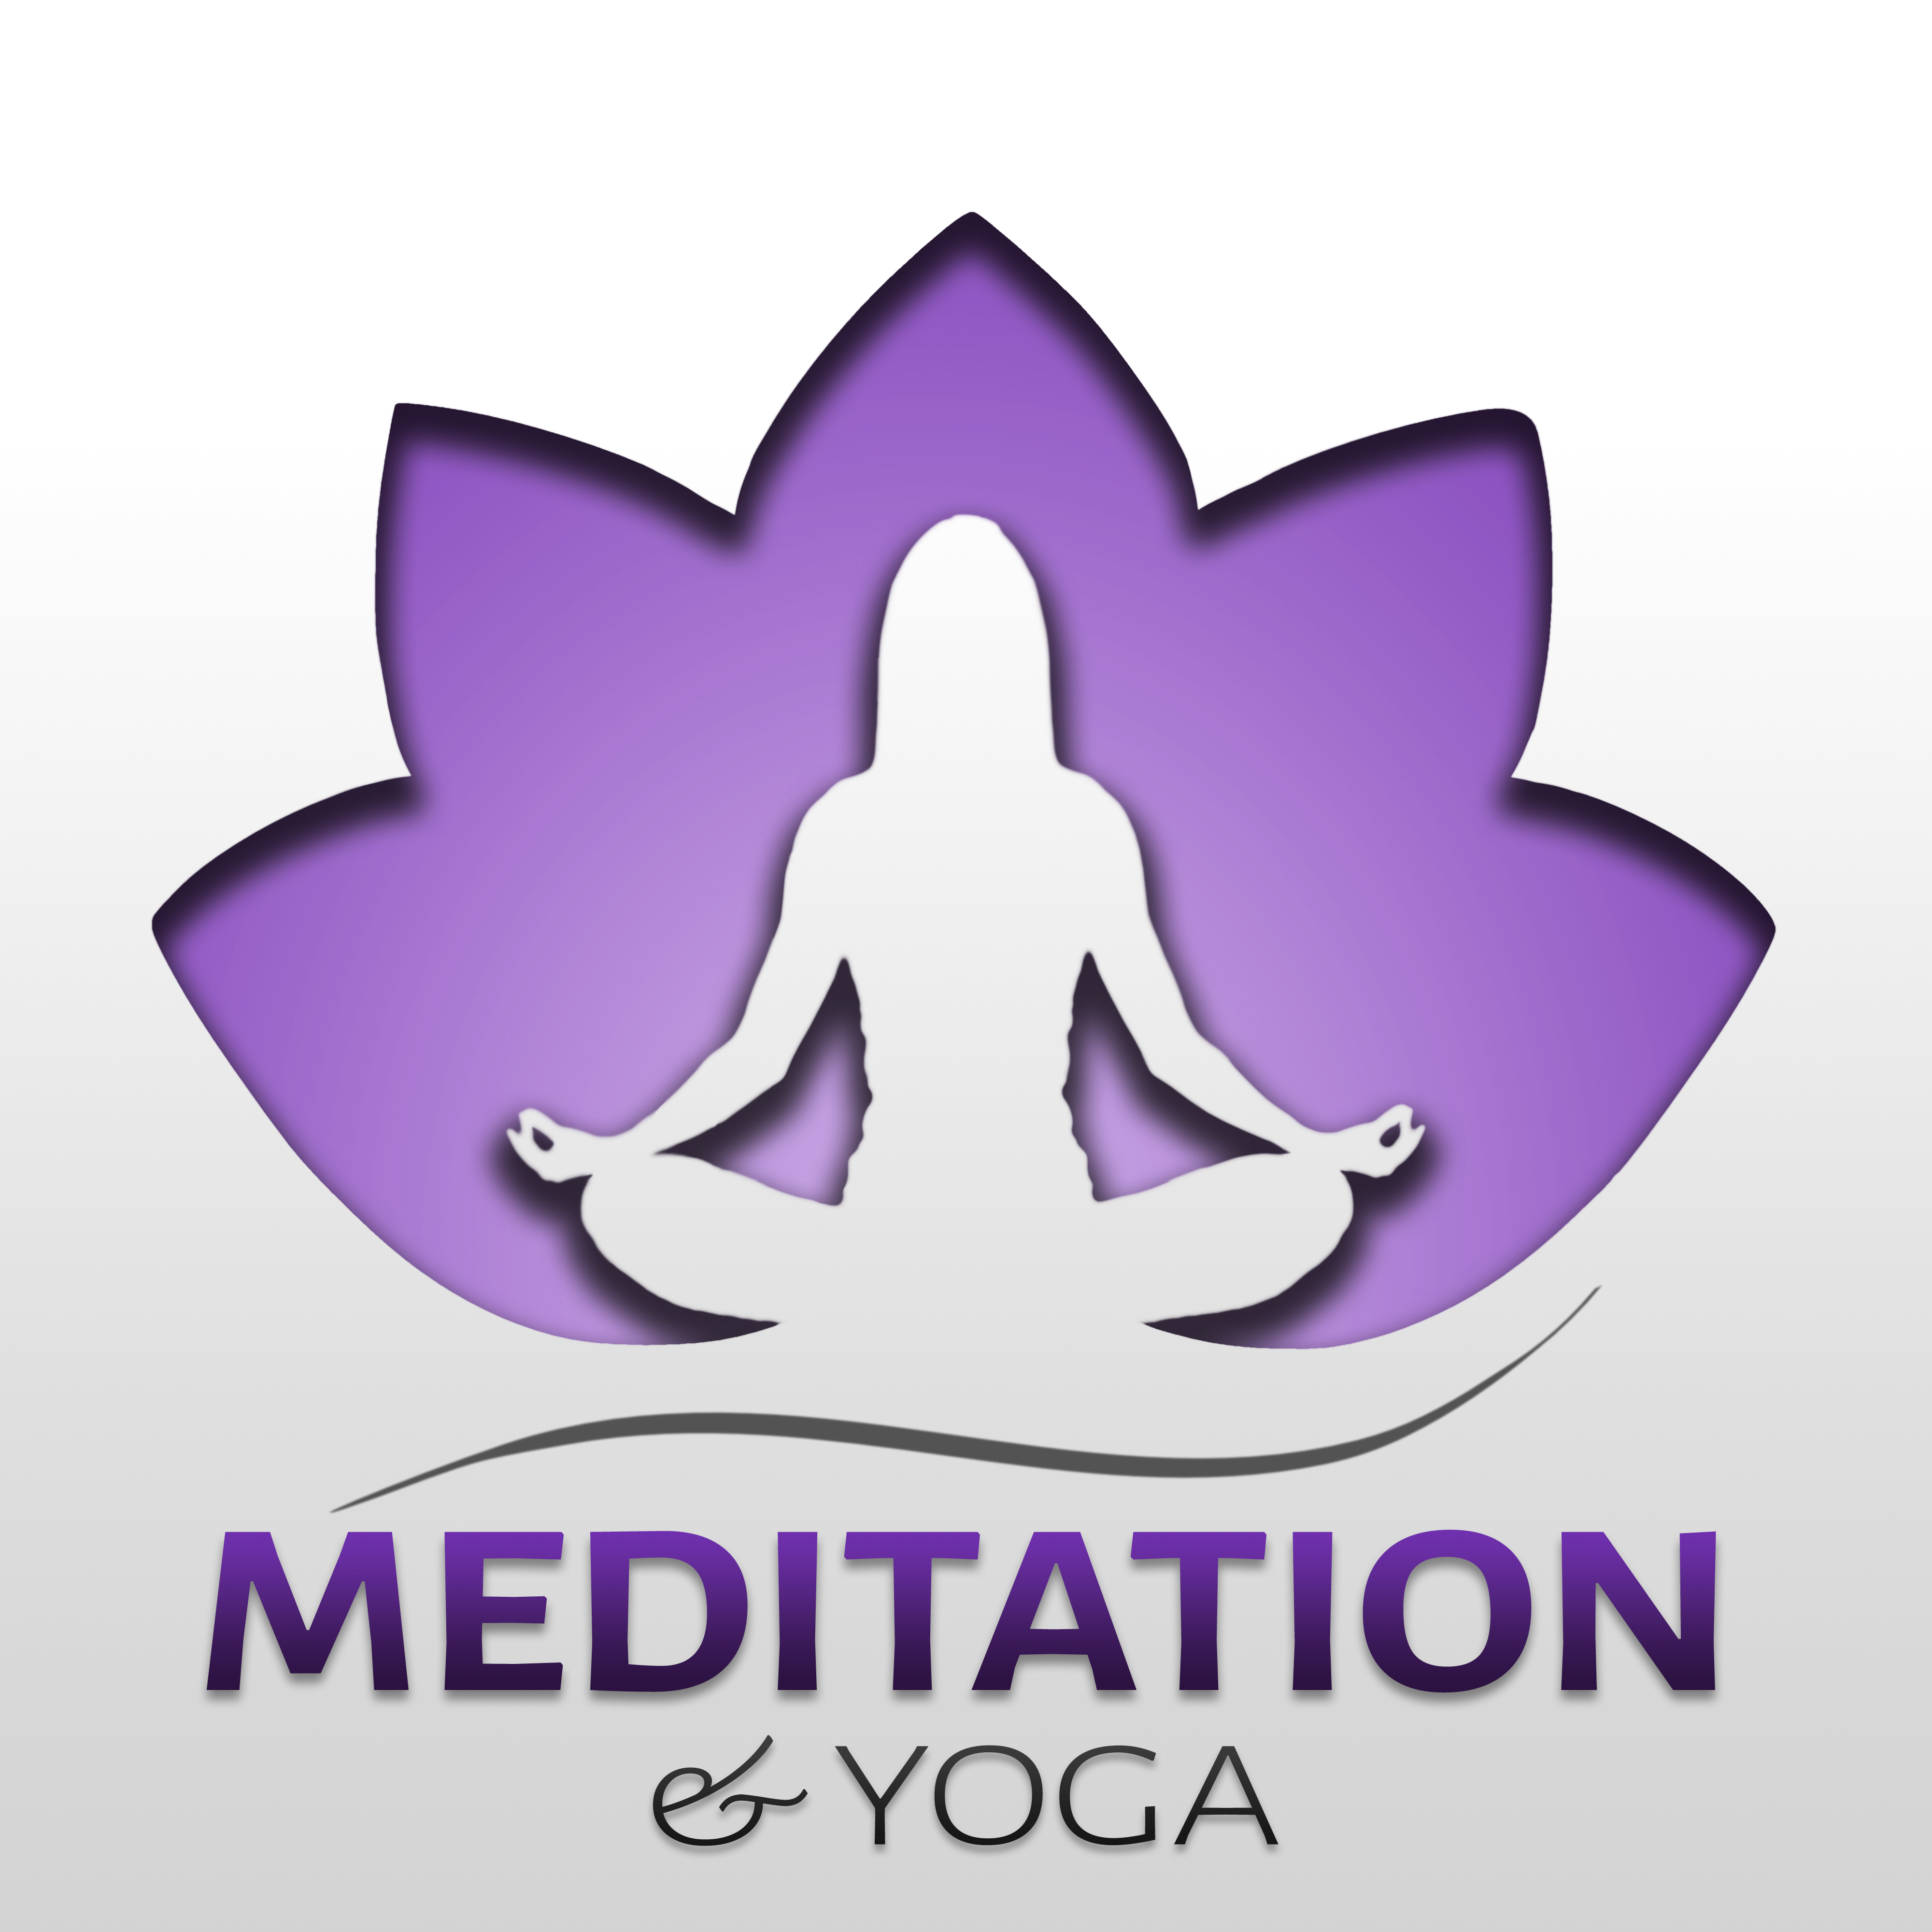 Meditation & Yoga - Meditation Music, Yoga, Reiki, Relaxation Music, Harmony Yoga